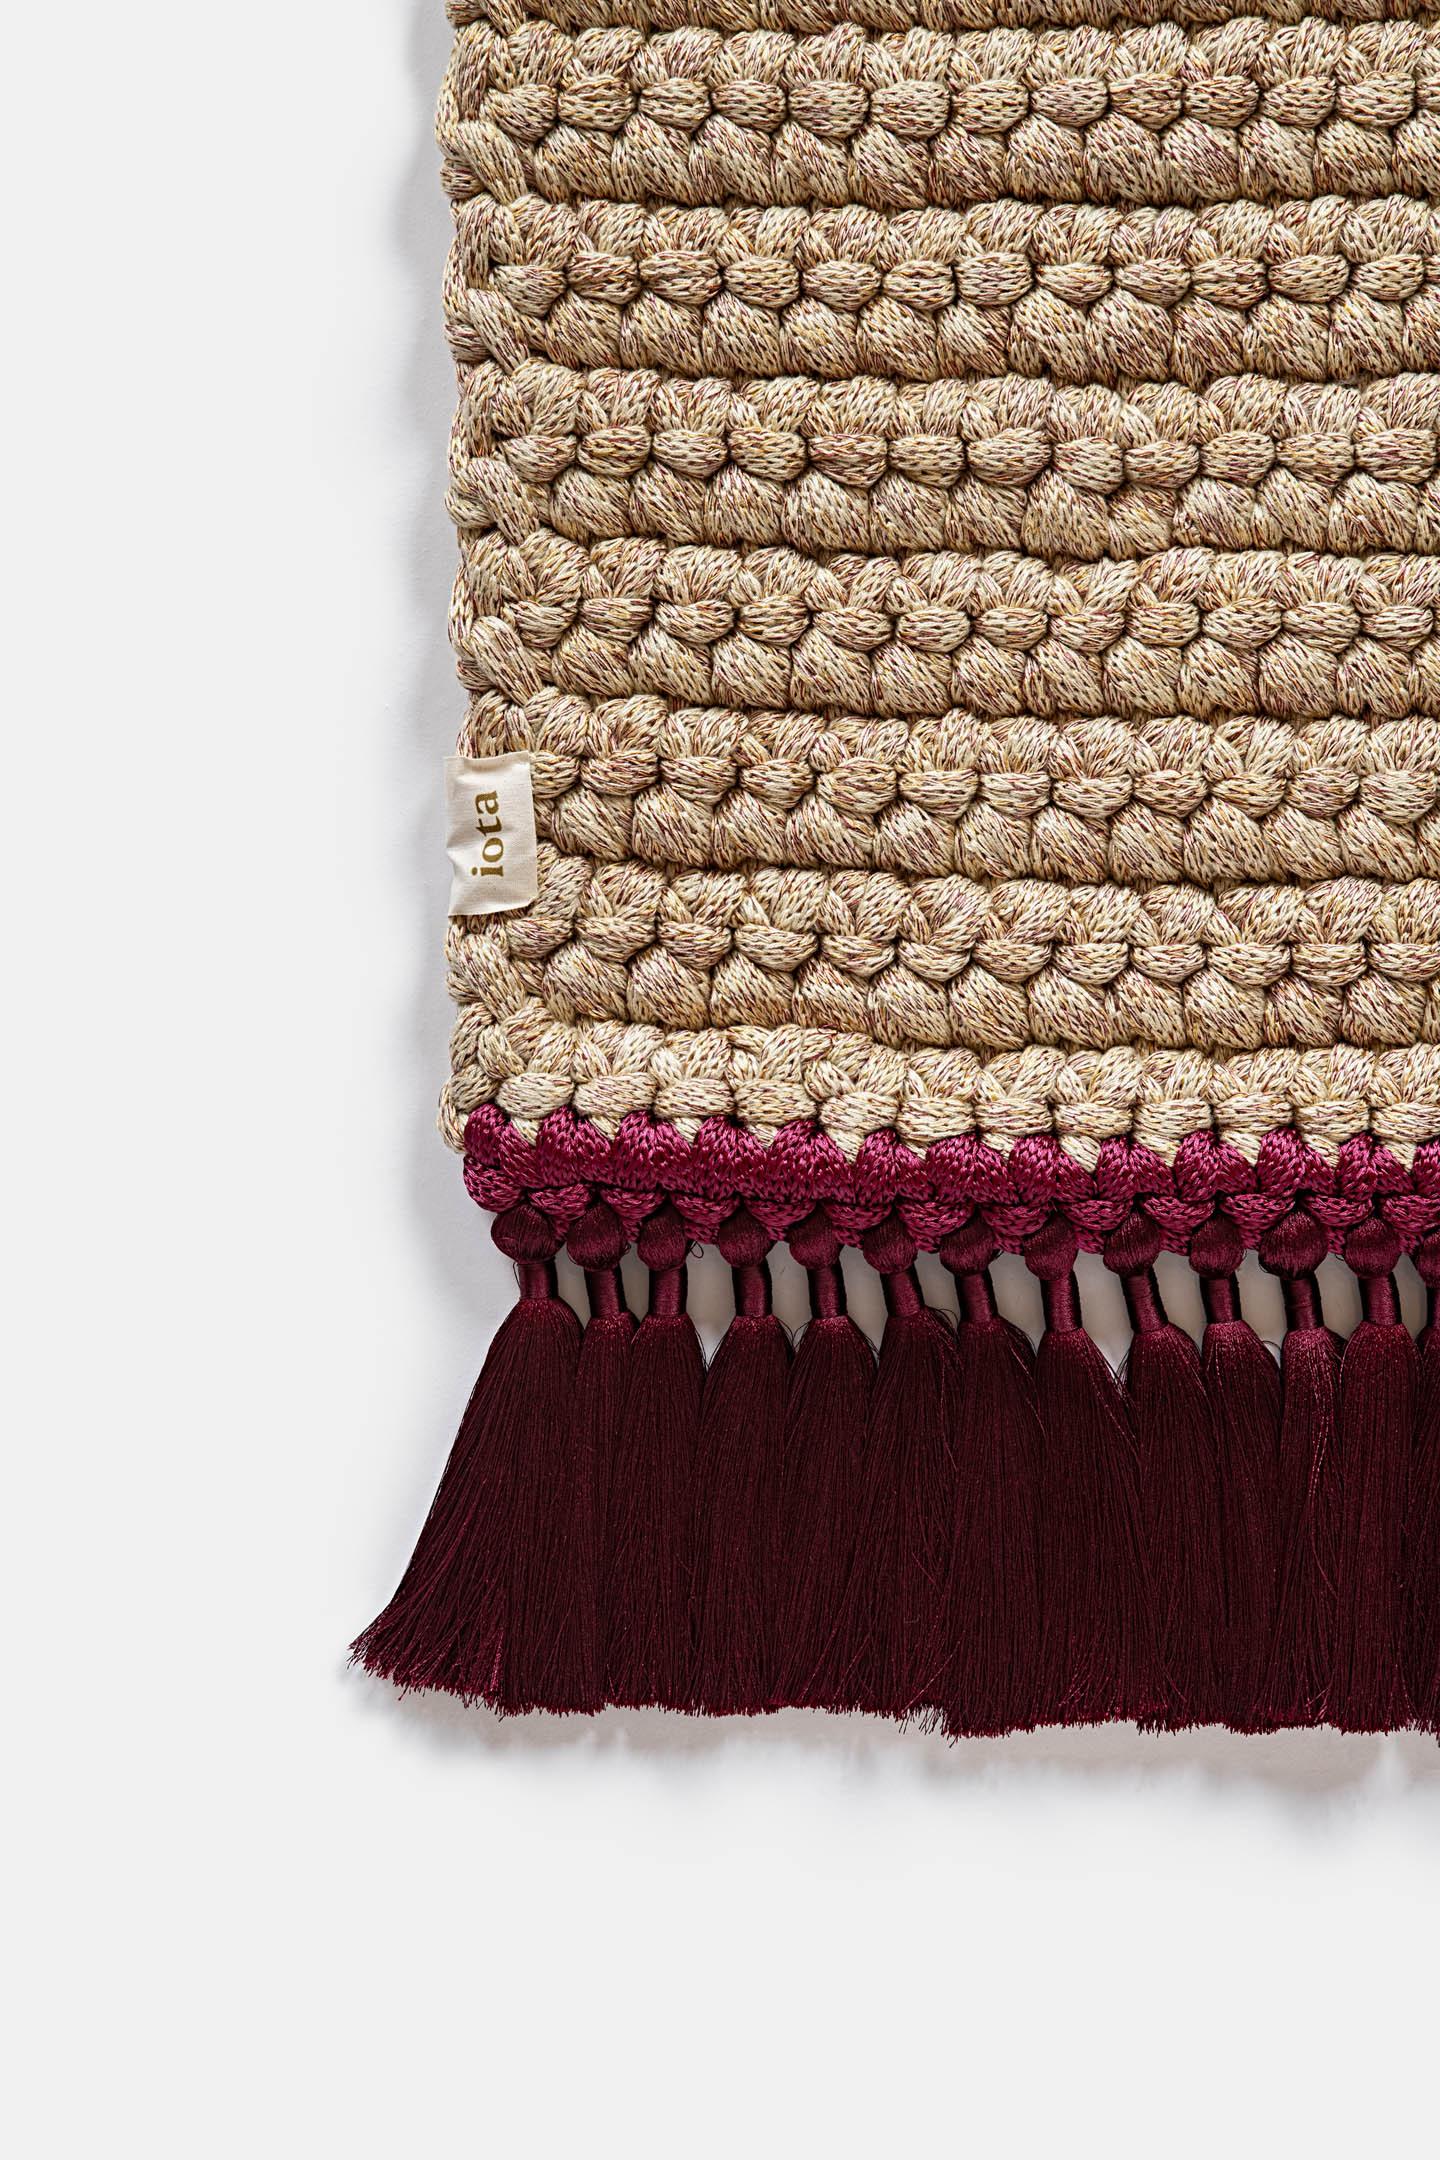 Israeli Handmade Crochet Two-Tone Rug in Beige Brown by iota For Sale